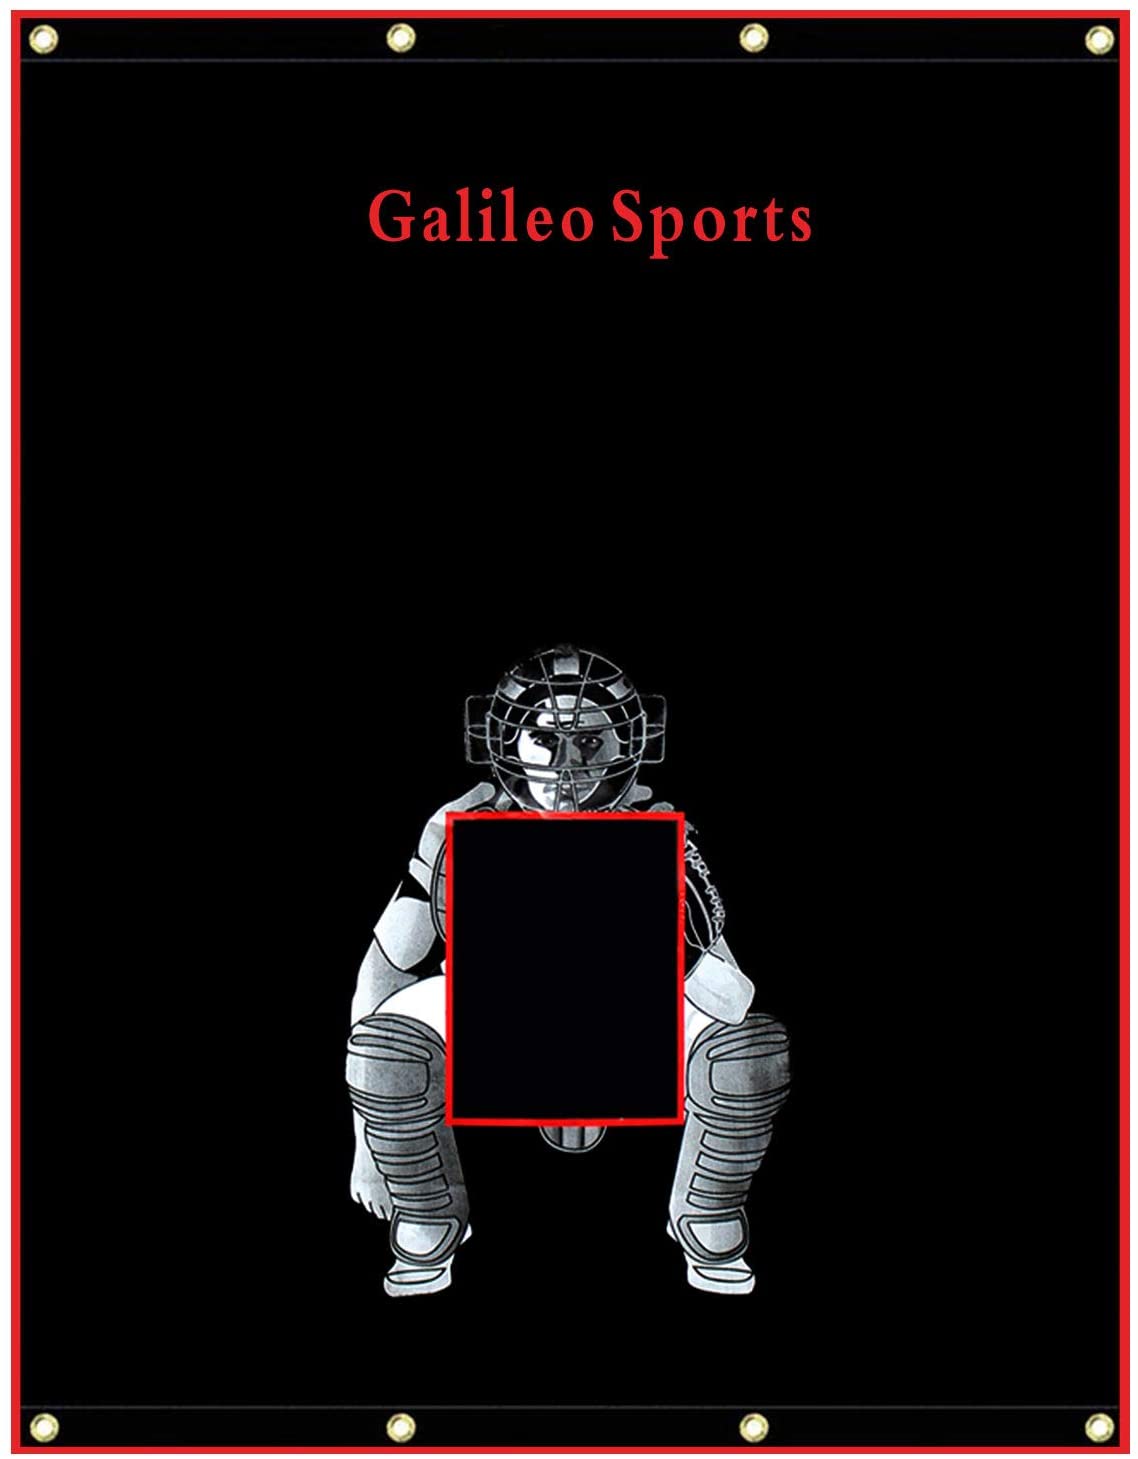 Galileo Softbol Backstop Vinilo Heavy Duty Béisbol Bating Cage Backstop Pitching Zone Target Trainer Backstop Net Saver con Catcher Image 5X6FT